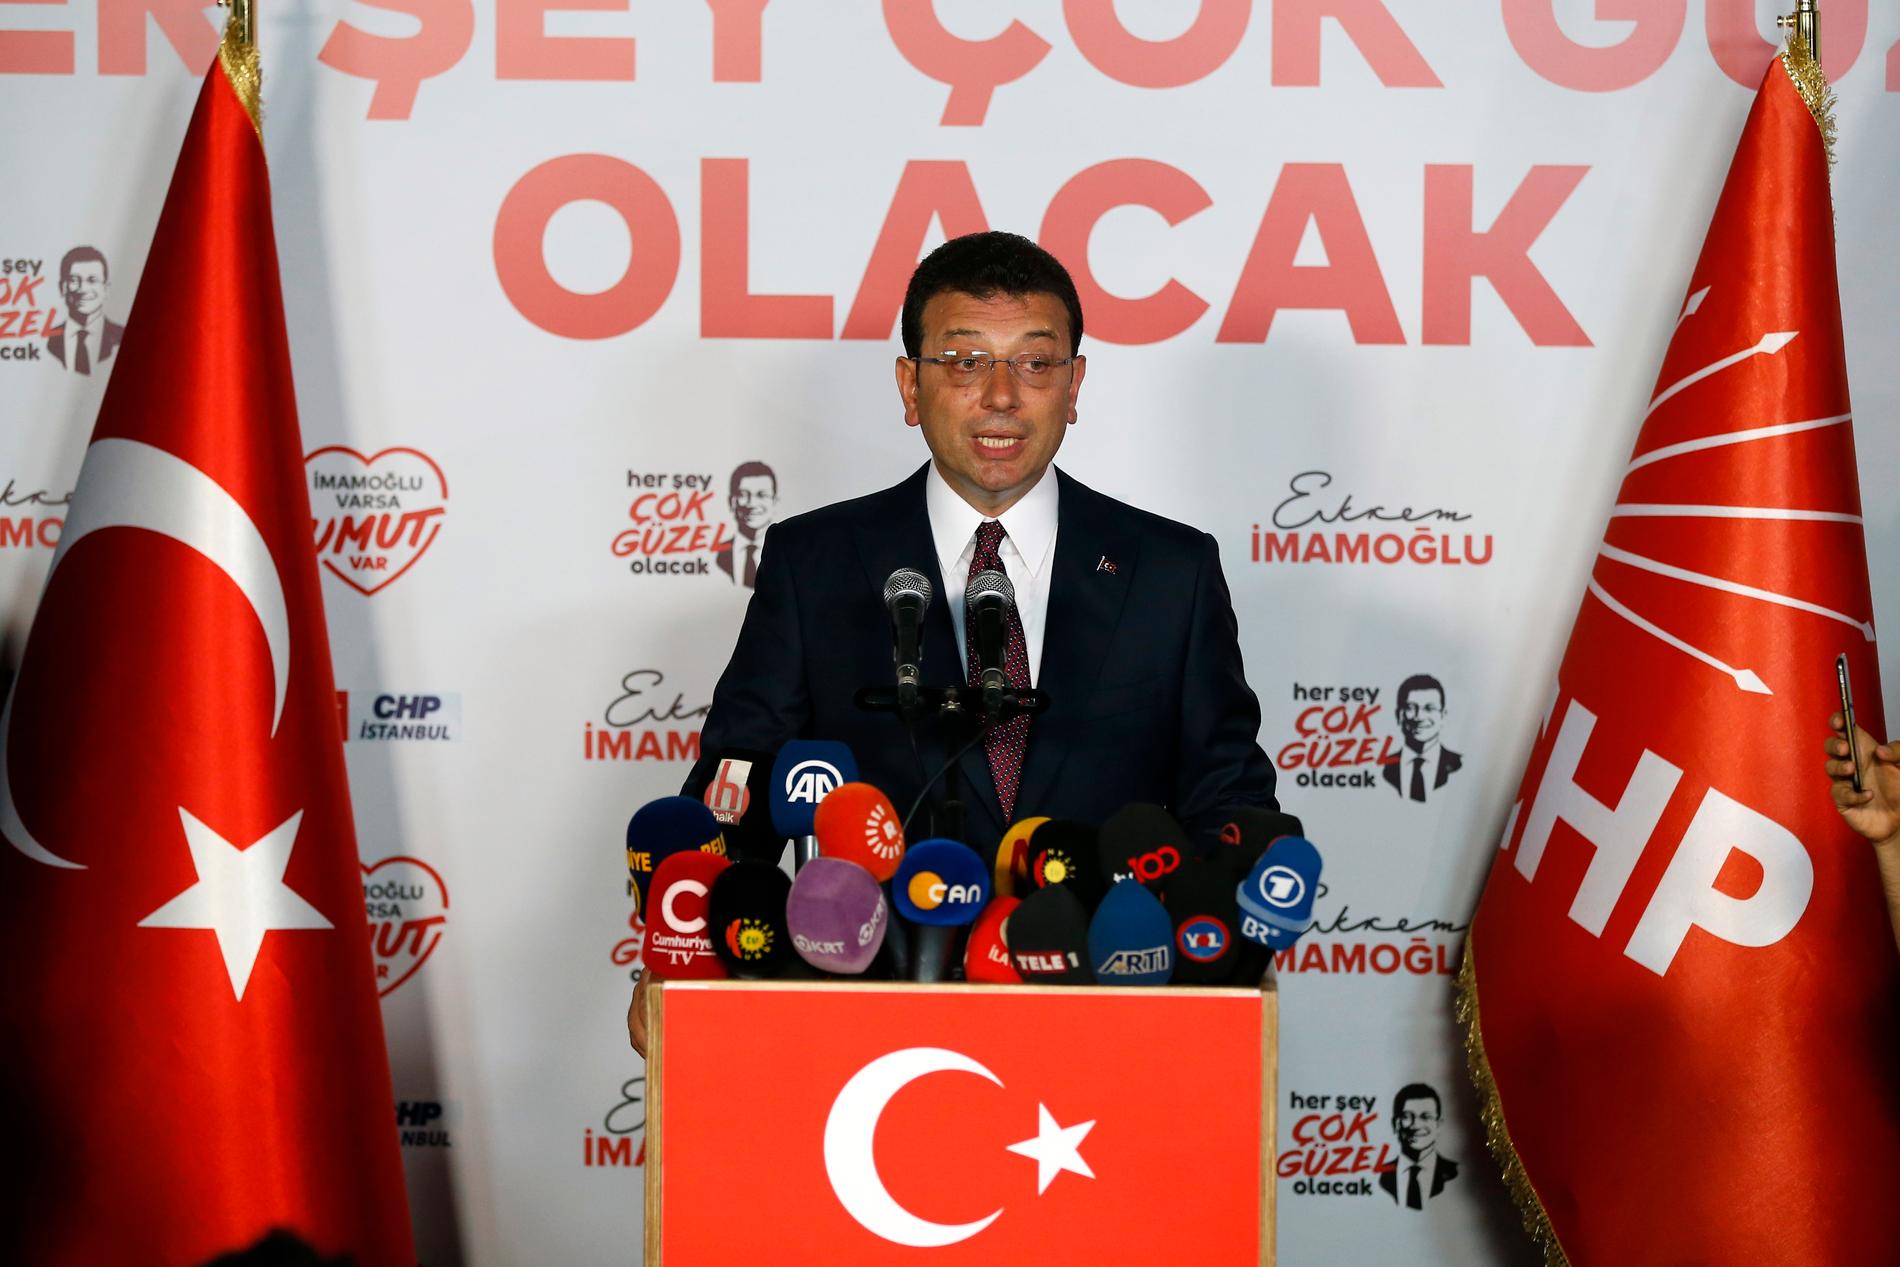 CHP:s kandidat Ekrem Imamoğlu segrade i borgmästarvalet i Istanbul.